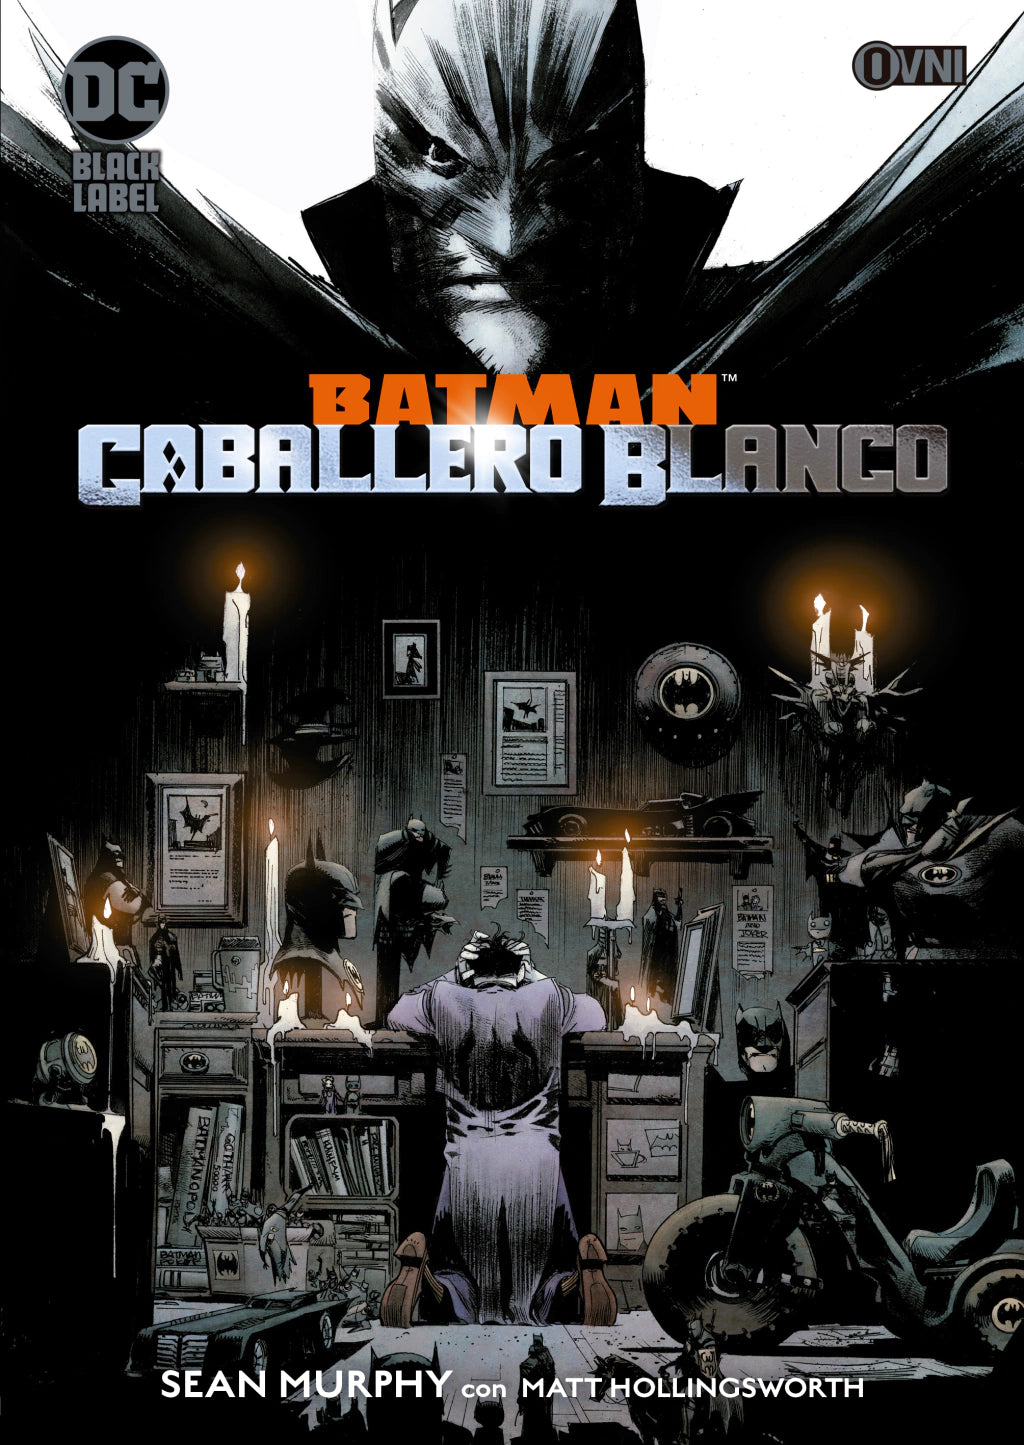 BATMAN: CABALLERO BLANCO OVNI Press ENcuadrocomics